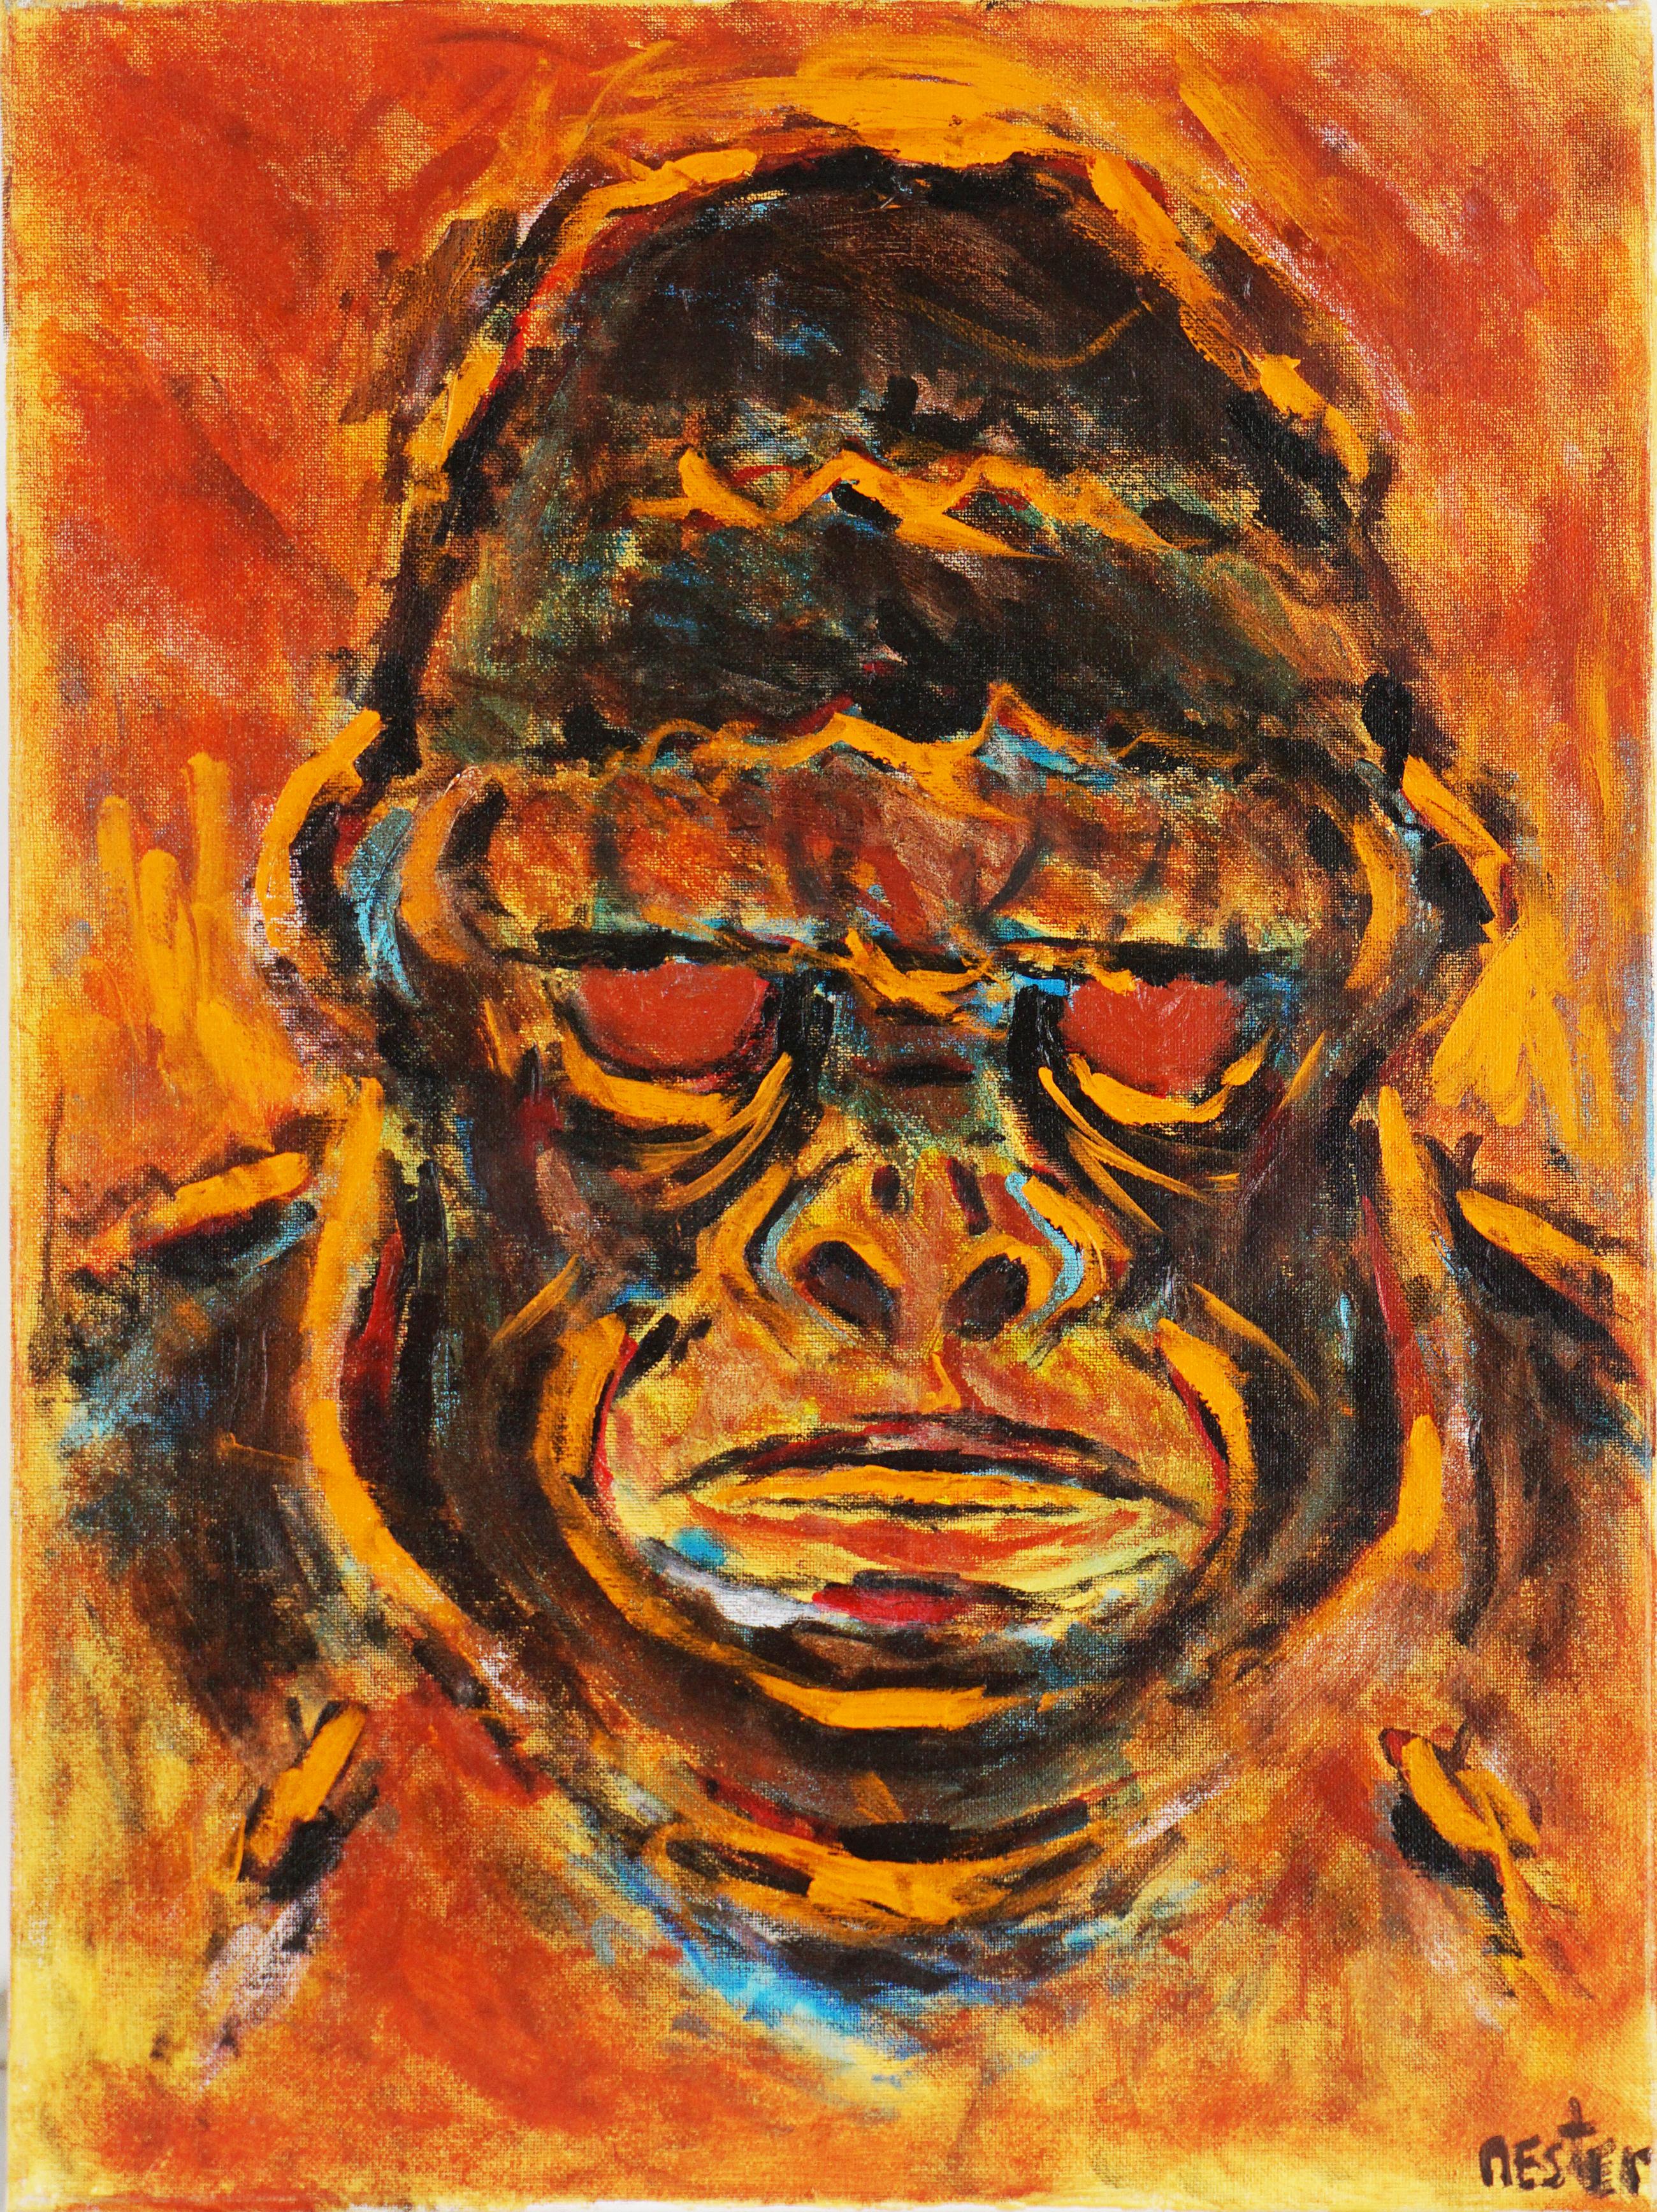 Animal Painting Daniel Nester - Gorilla expressionniste abstraite fauviste et expressionniste du Lowland